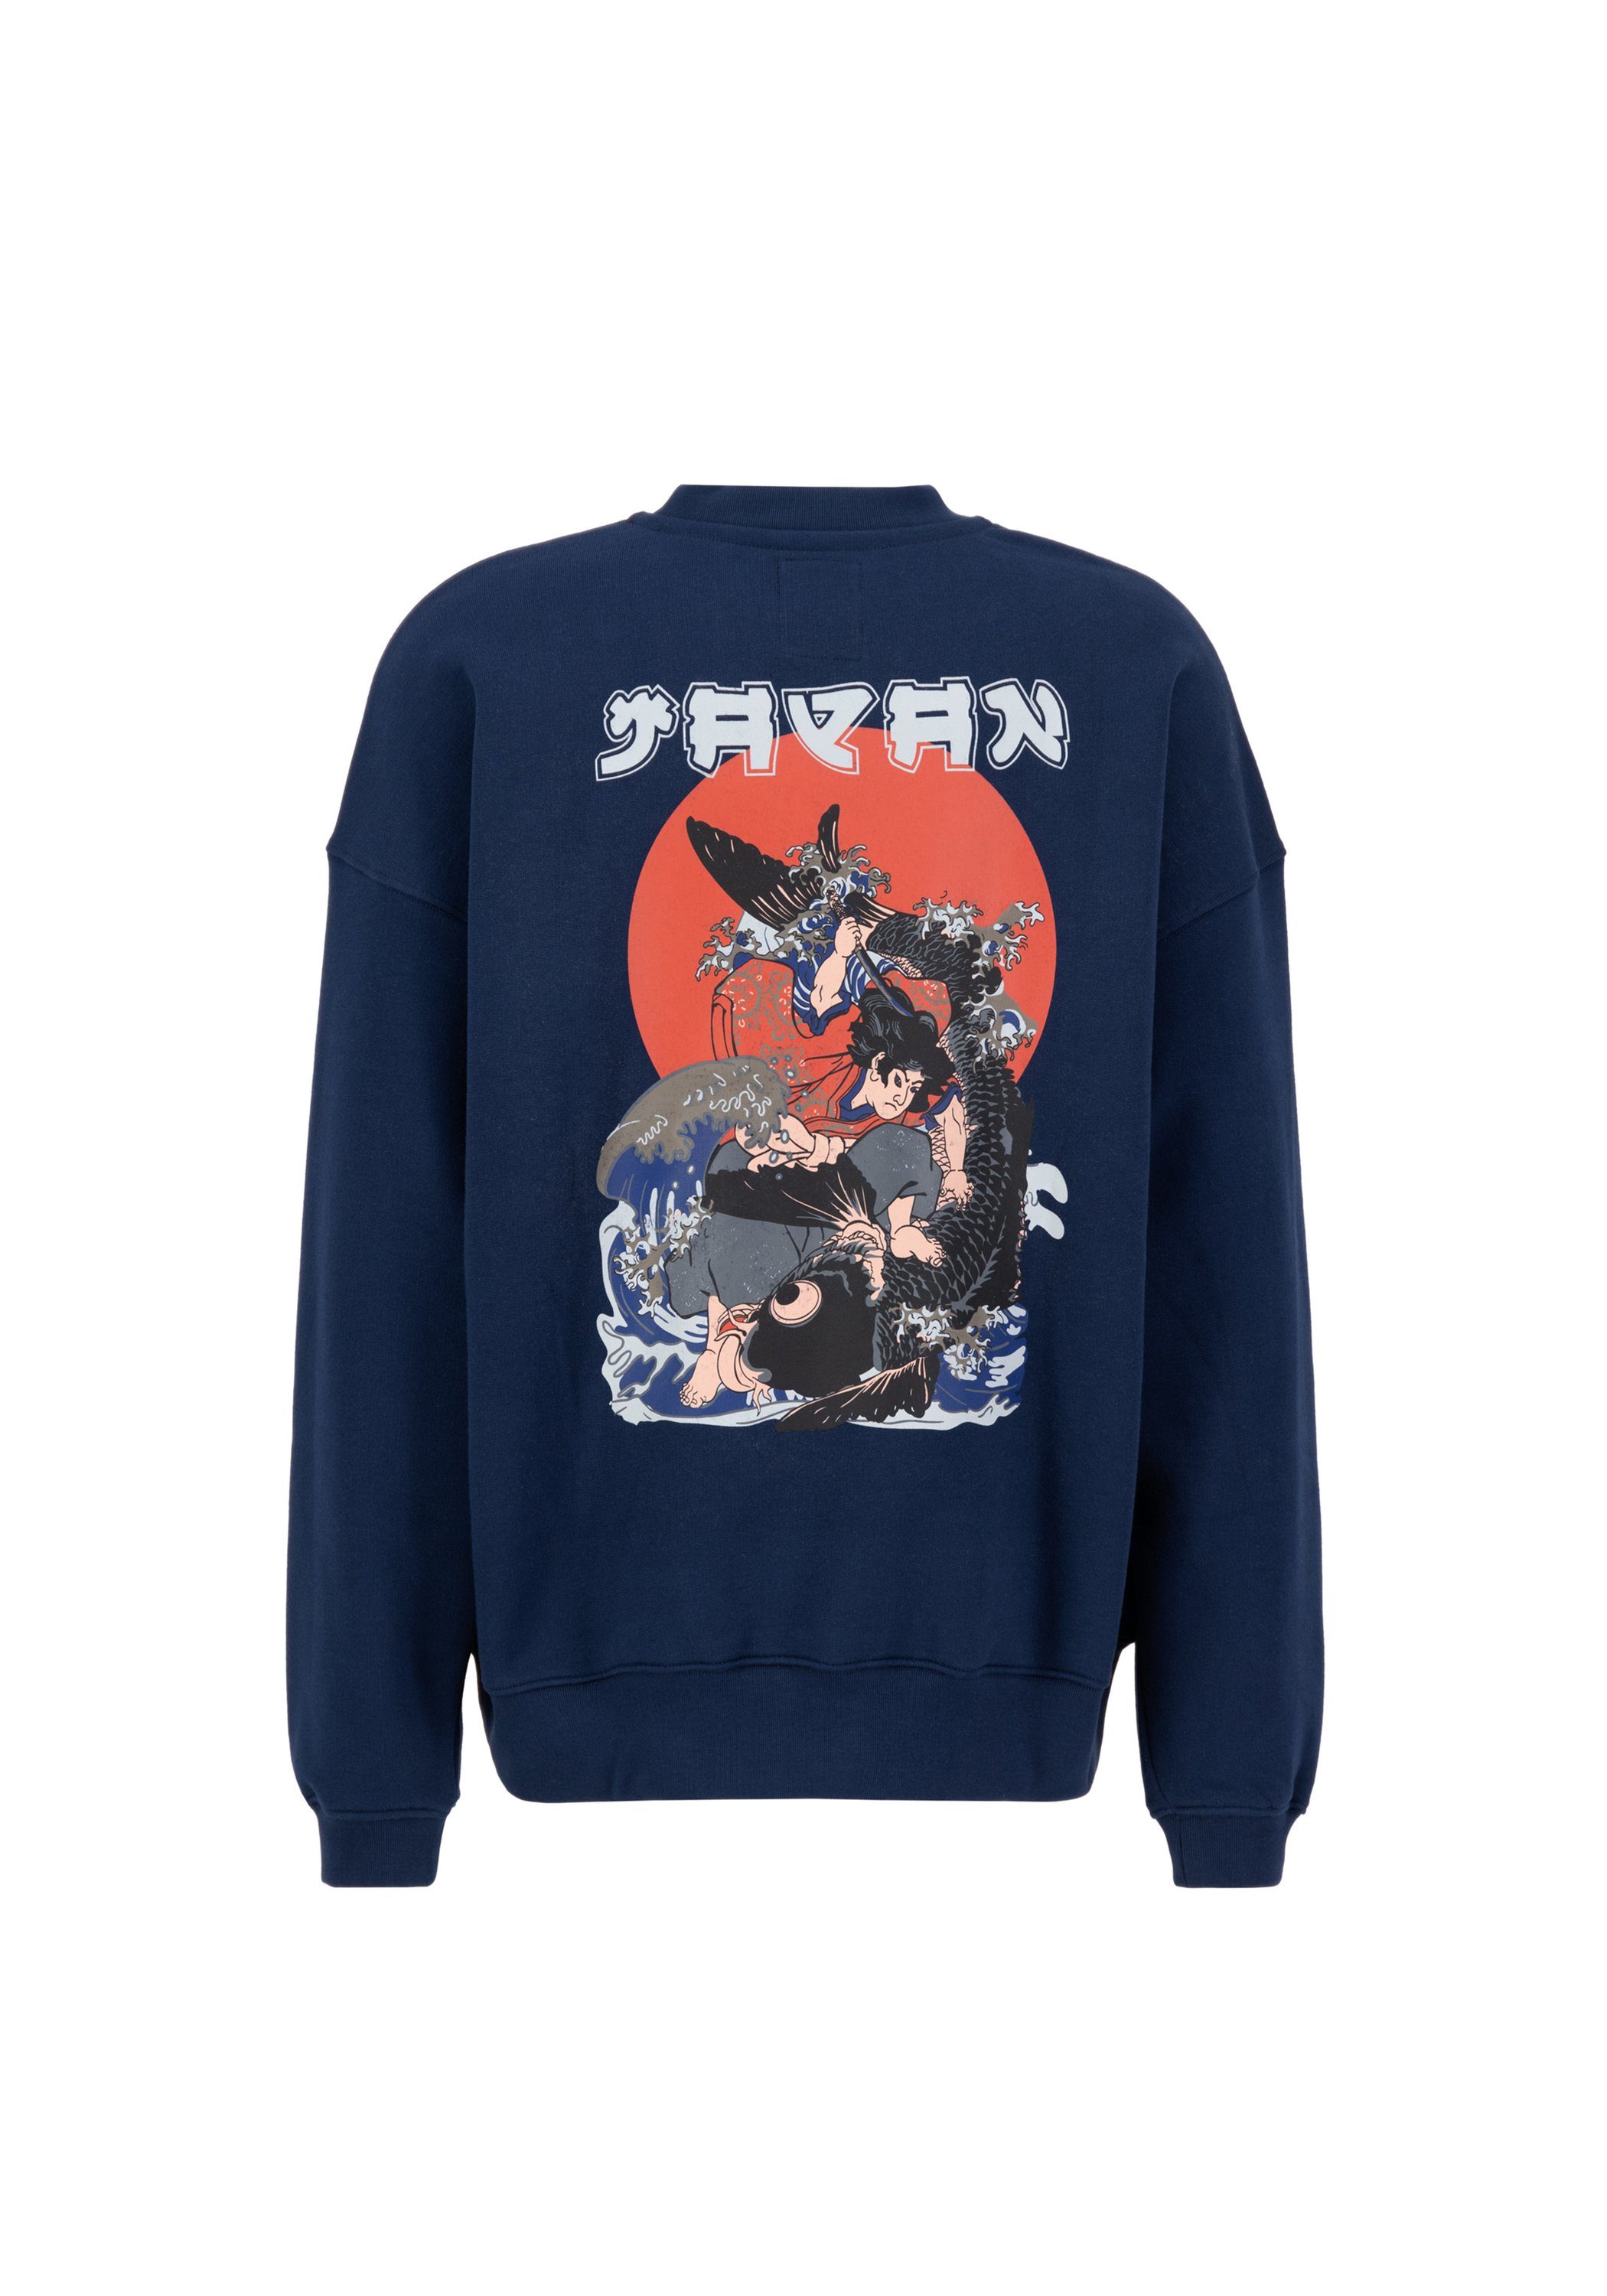 Alpha Industries Sweater Men Sweatshirts Japan Wave Warrior Sweater